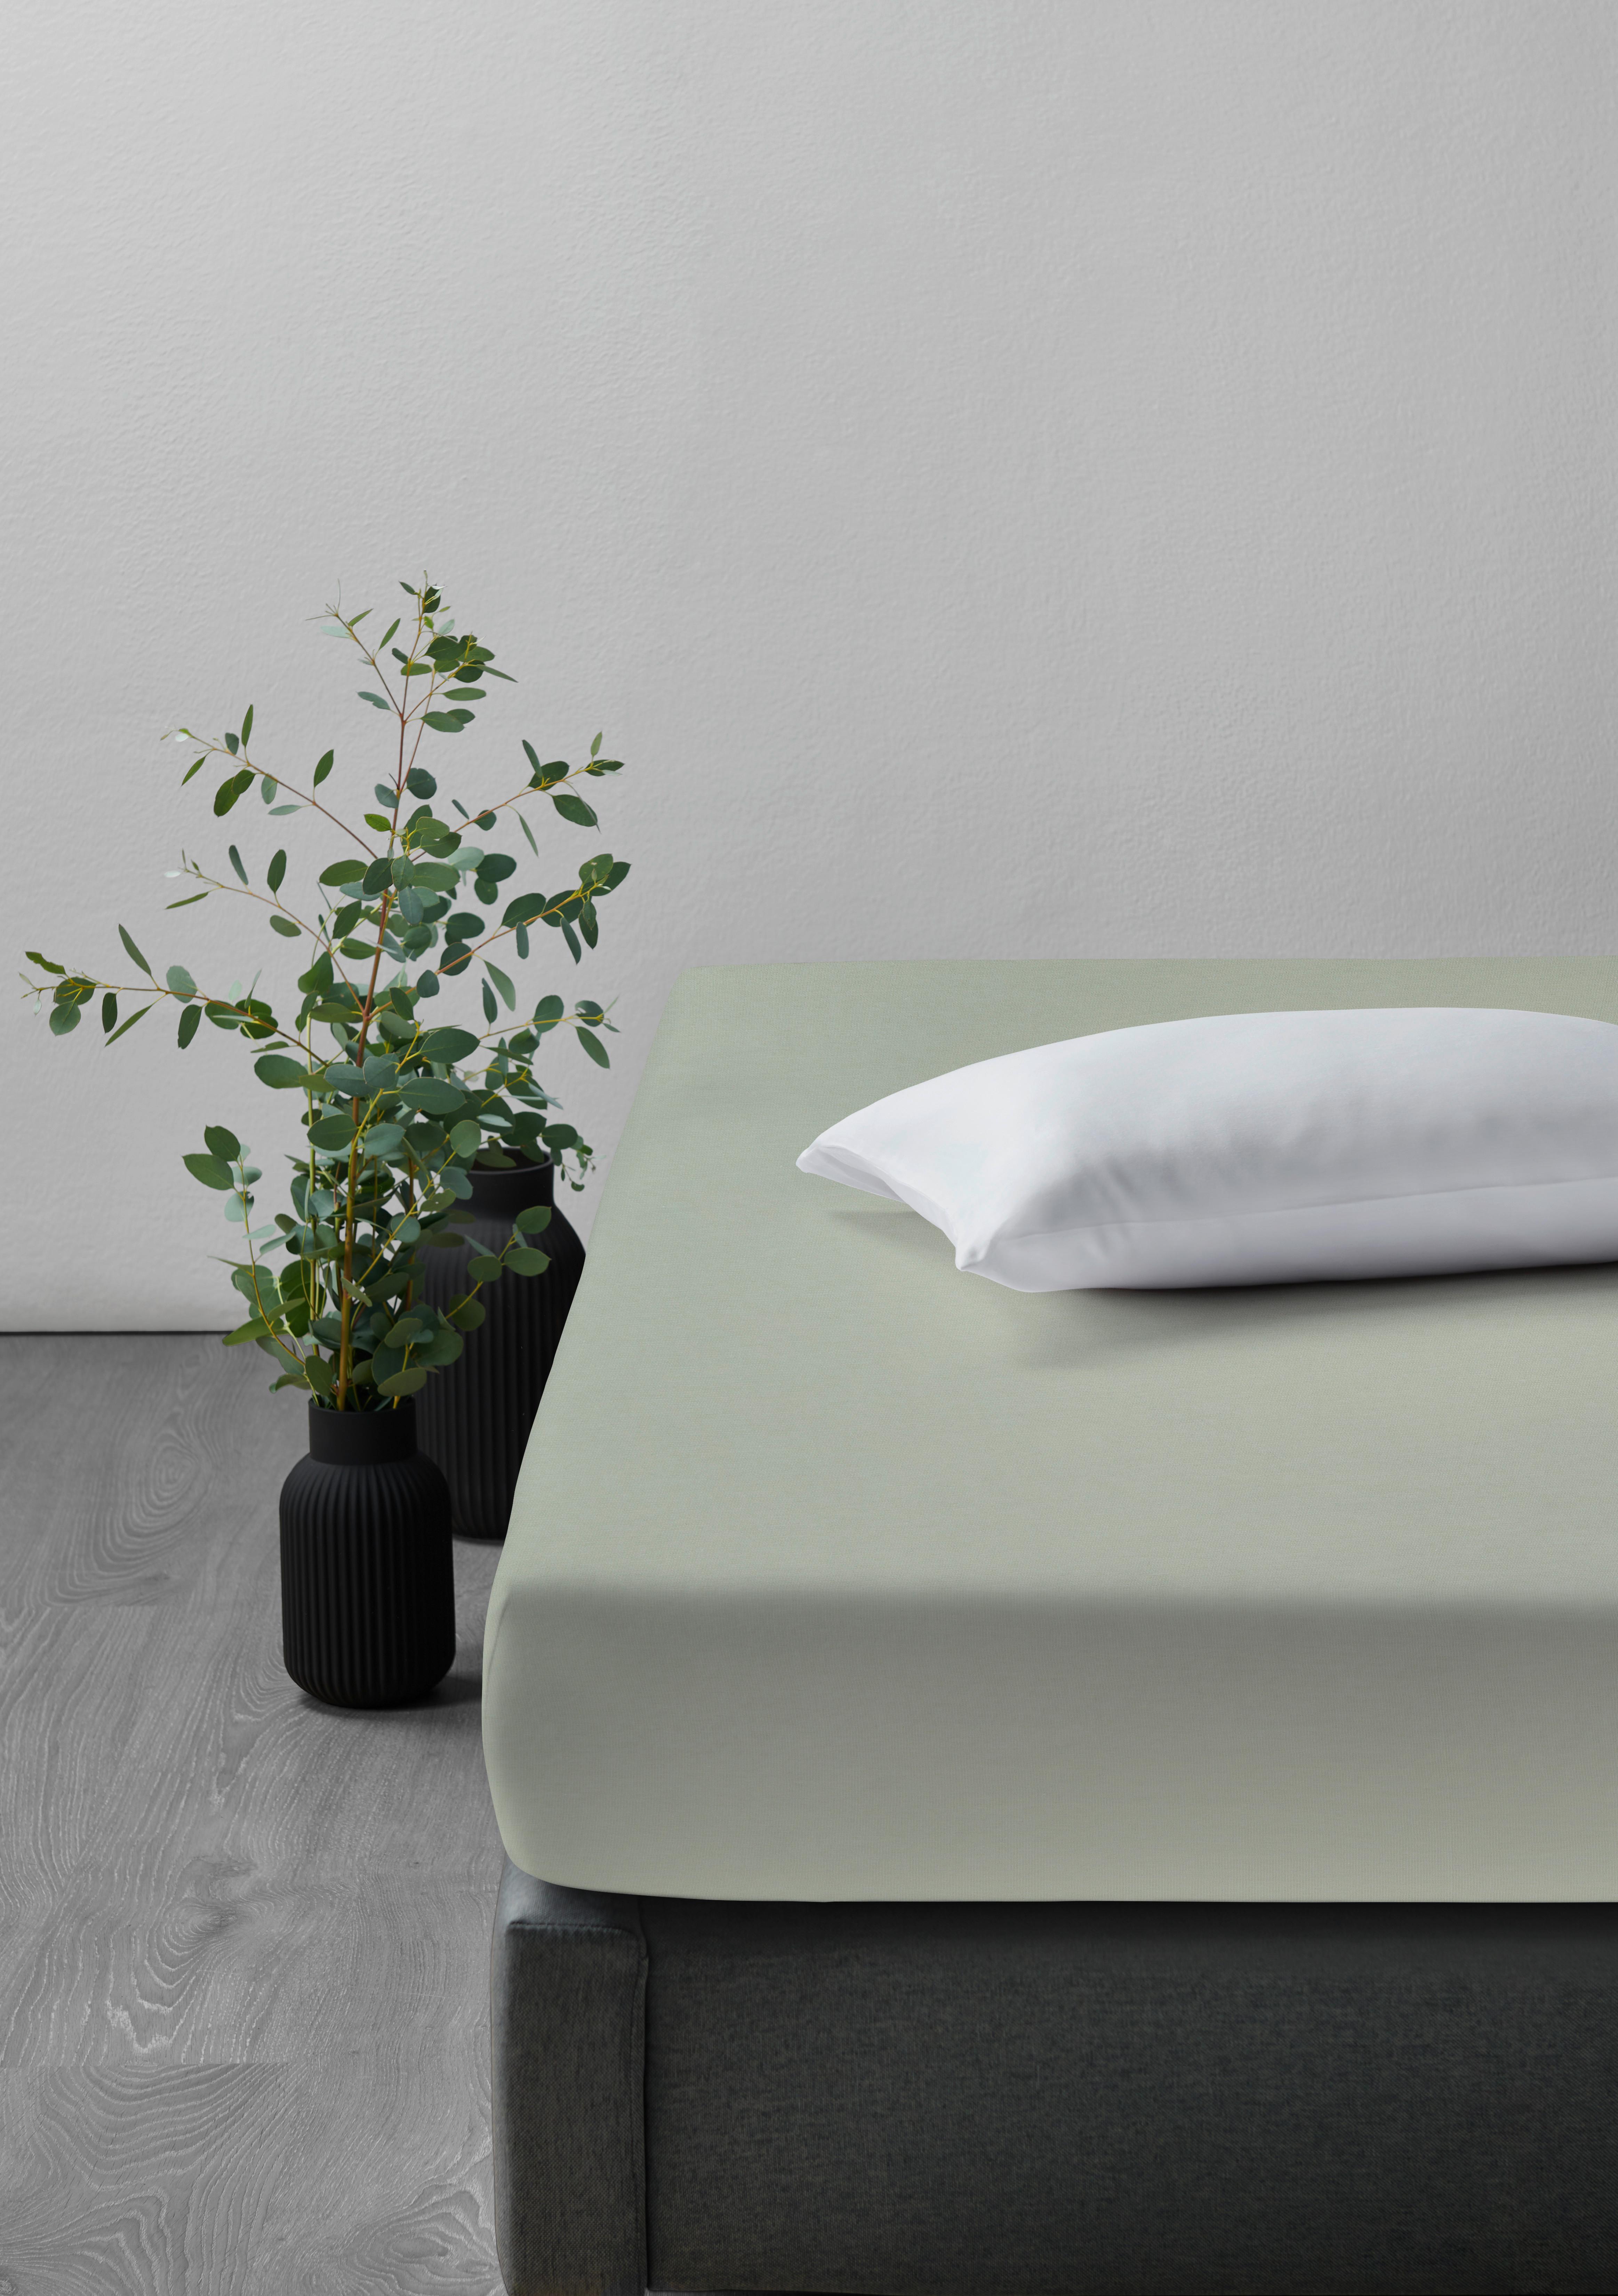 Elastické Prostěradlo Elasthan, 150/200cm, Zelená - zelená, textil (150/200/28cm) - Premium Living